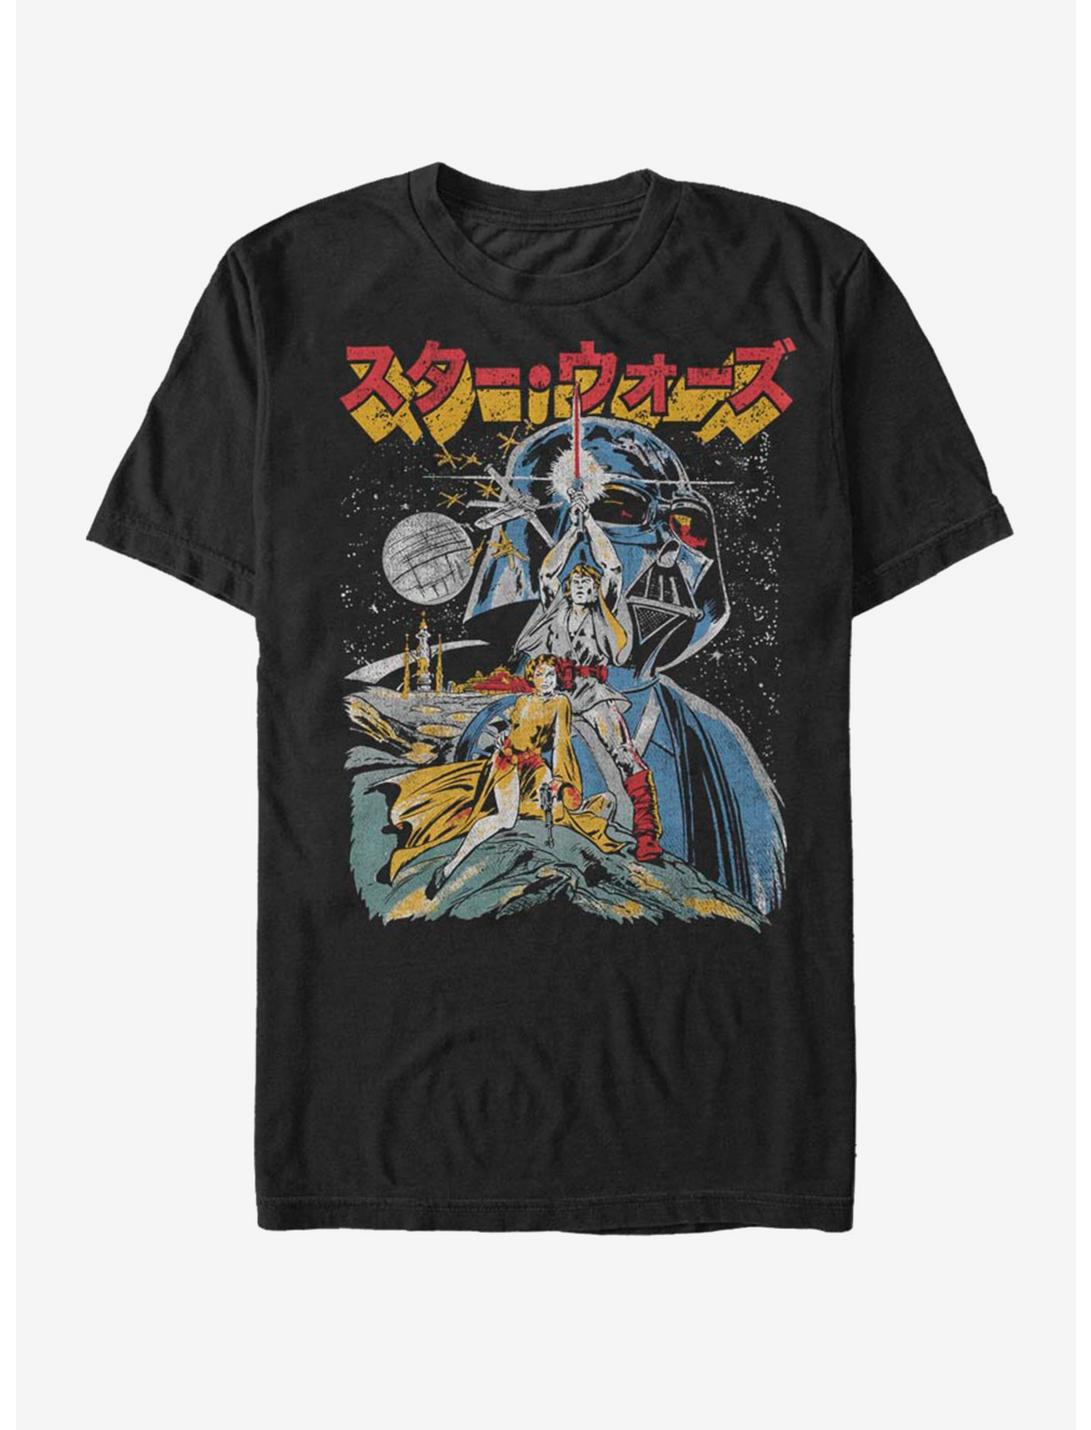 Star Wars Japanese Text Poster T-Shirt, BLACK, hi-res